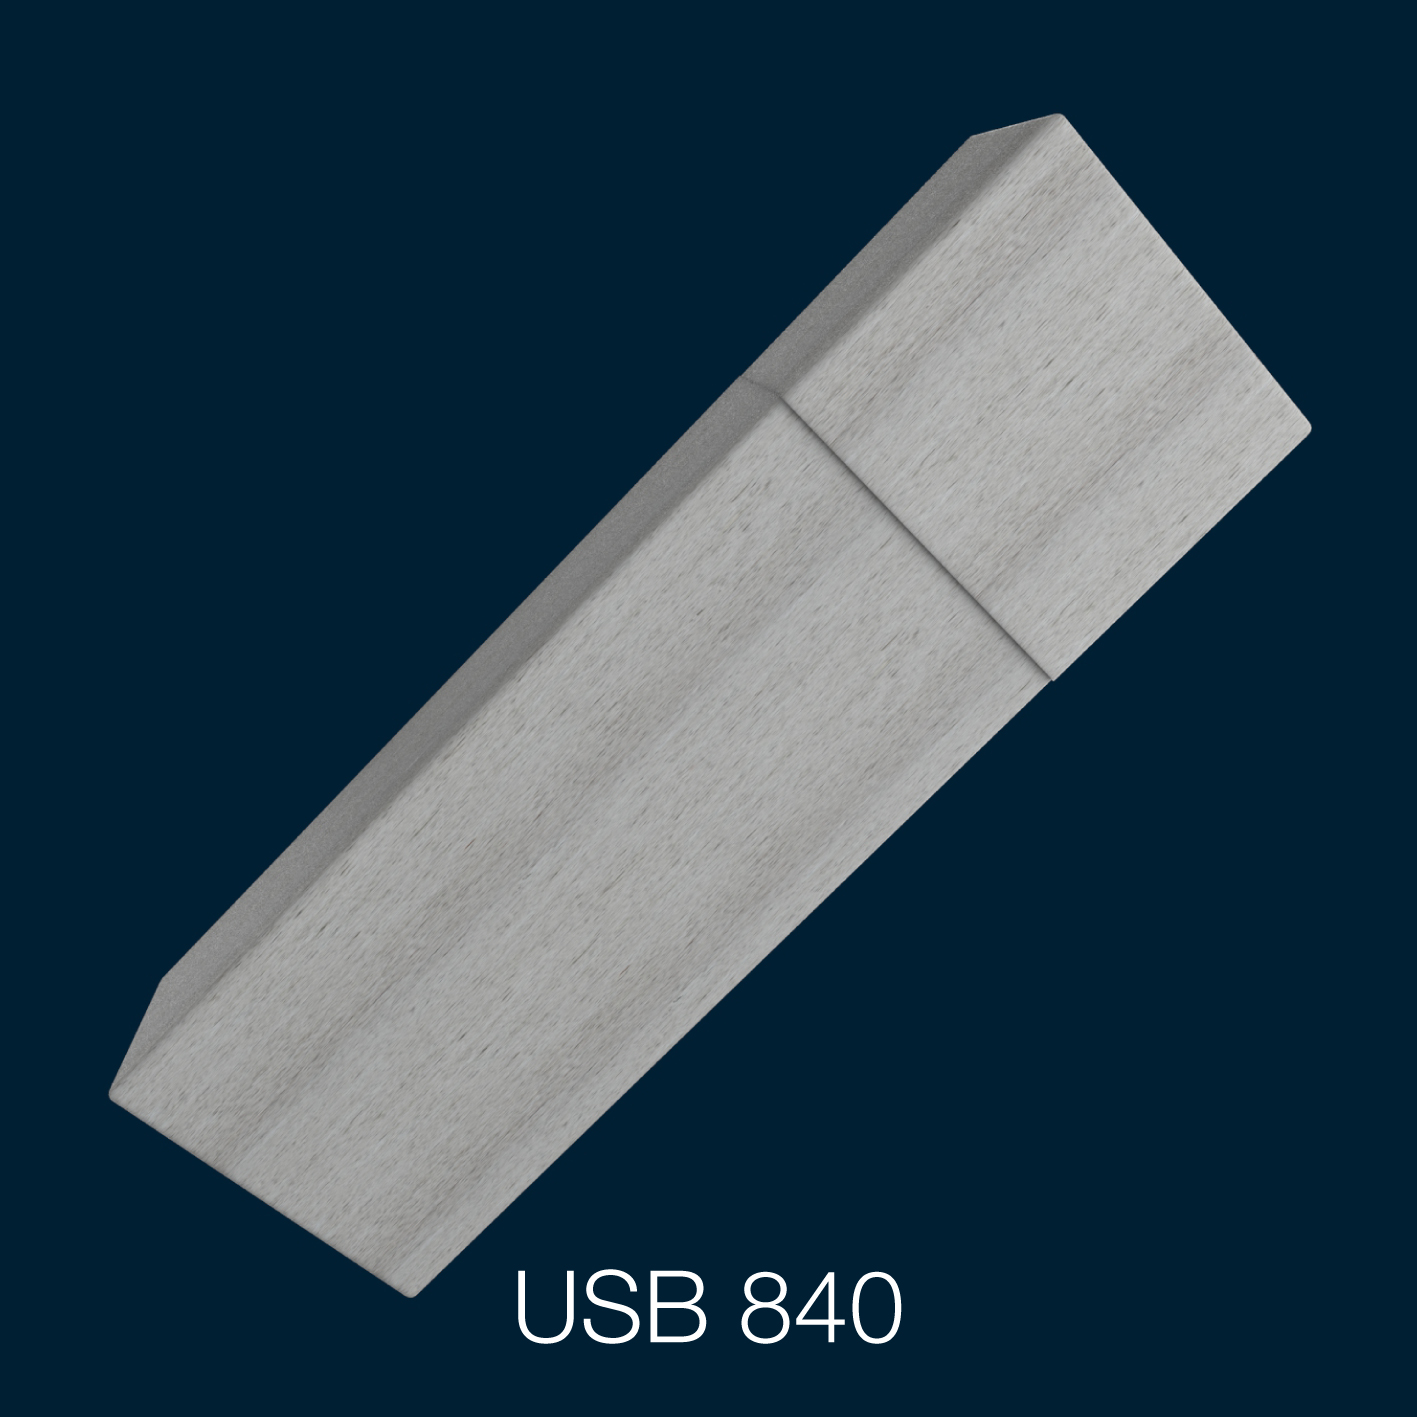 840-USB-cement-LABEL.jpg